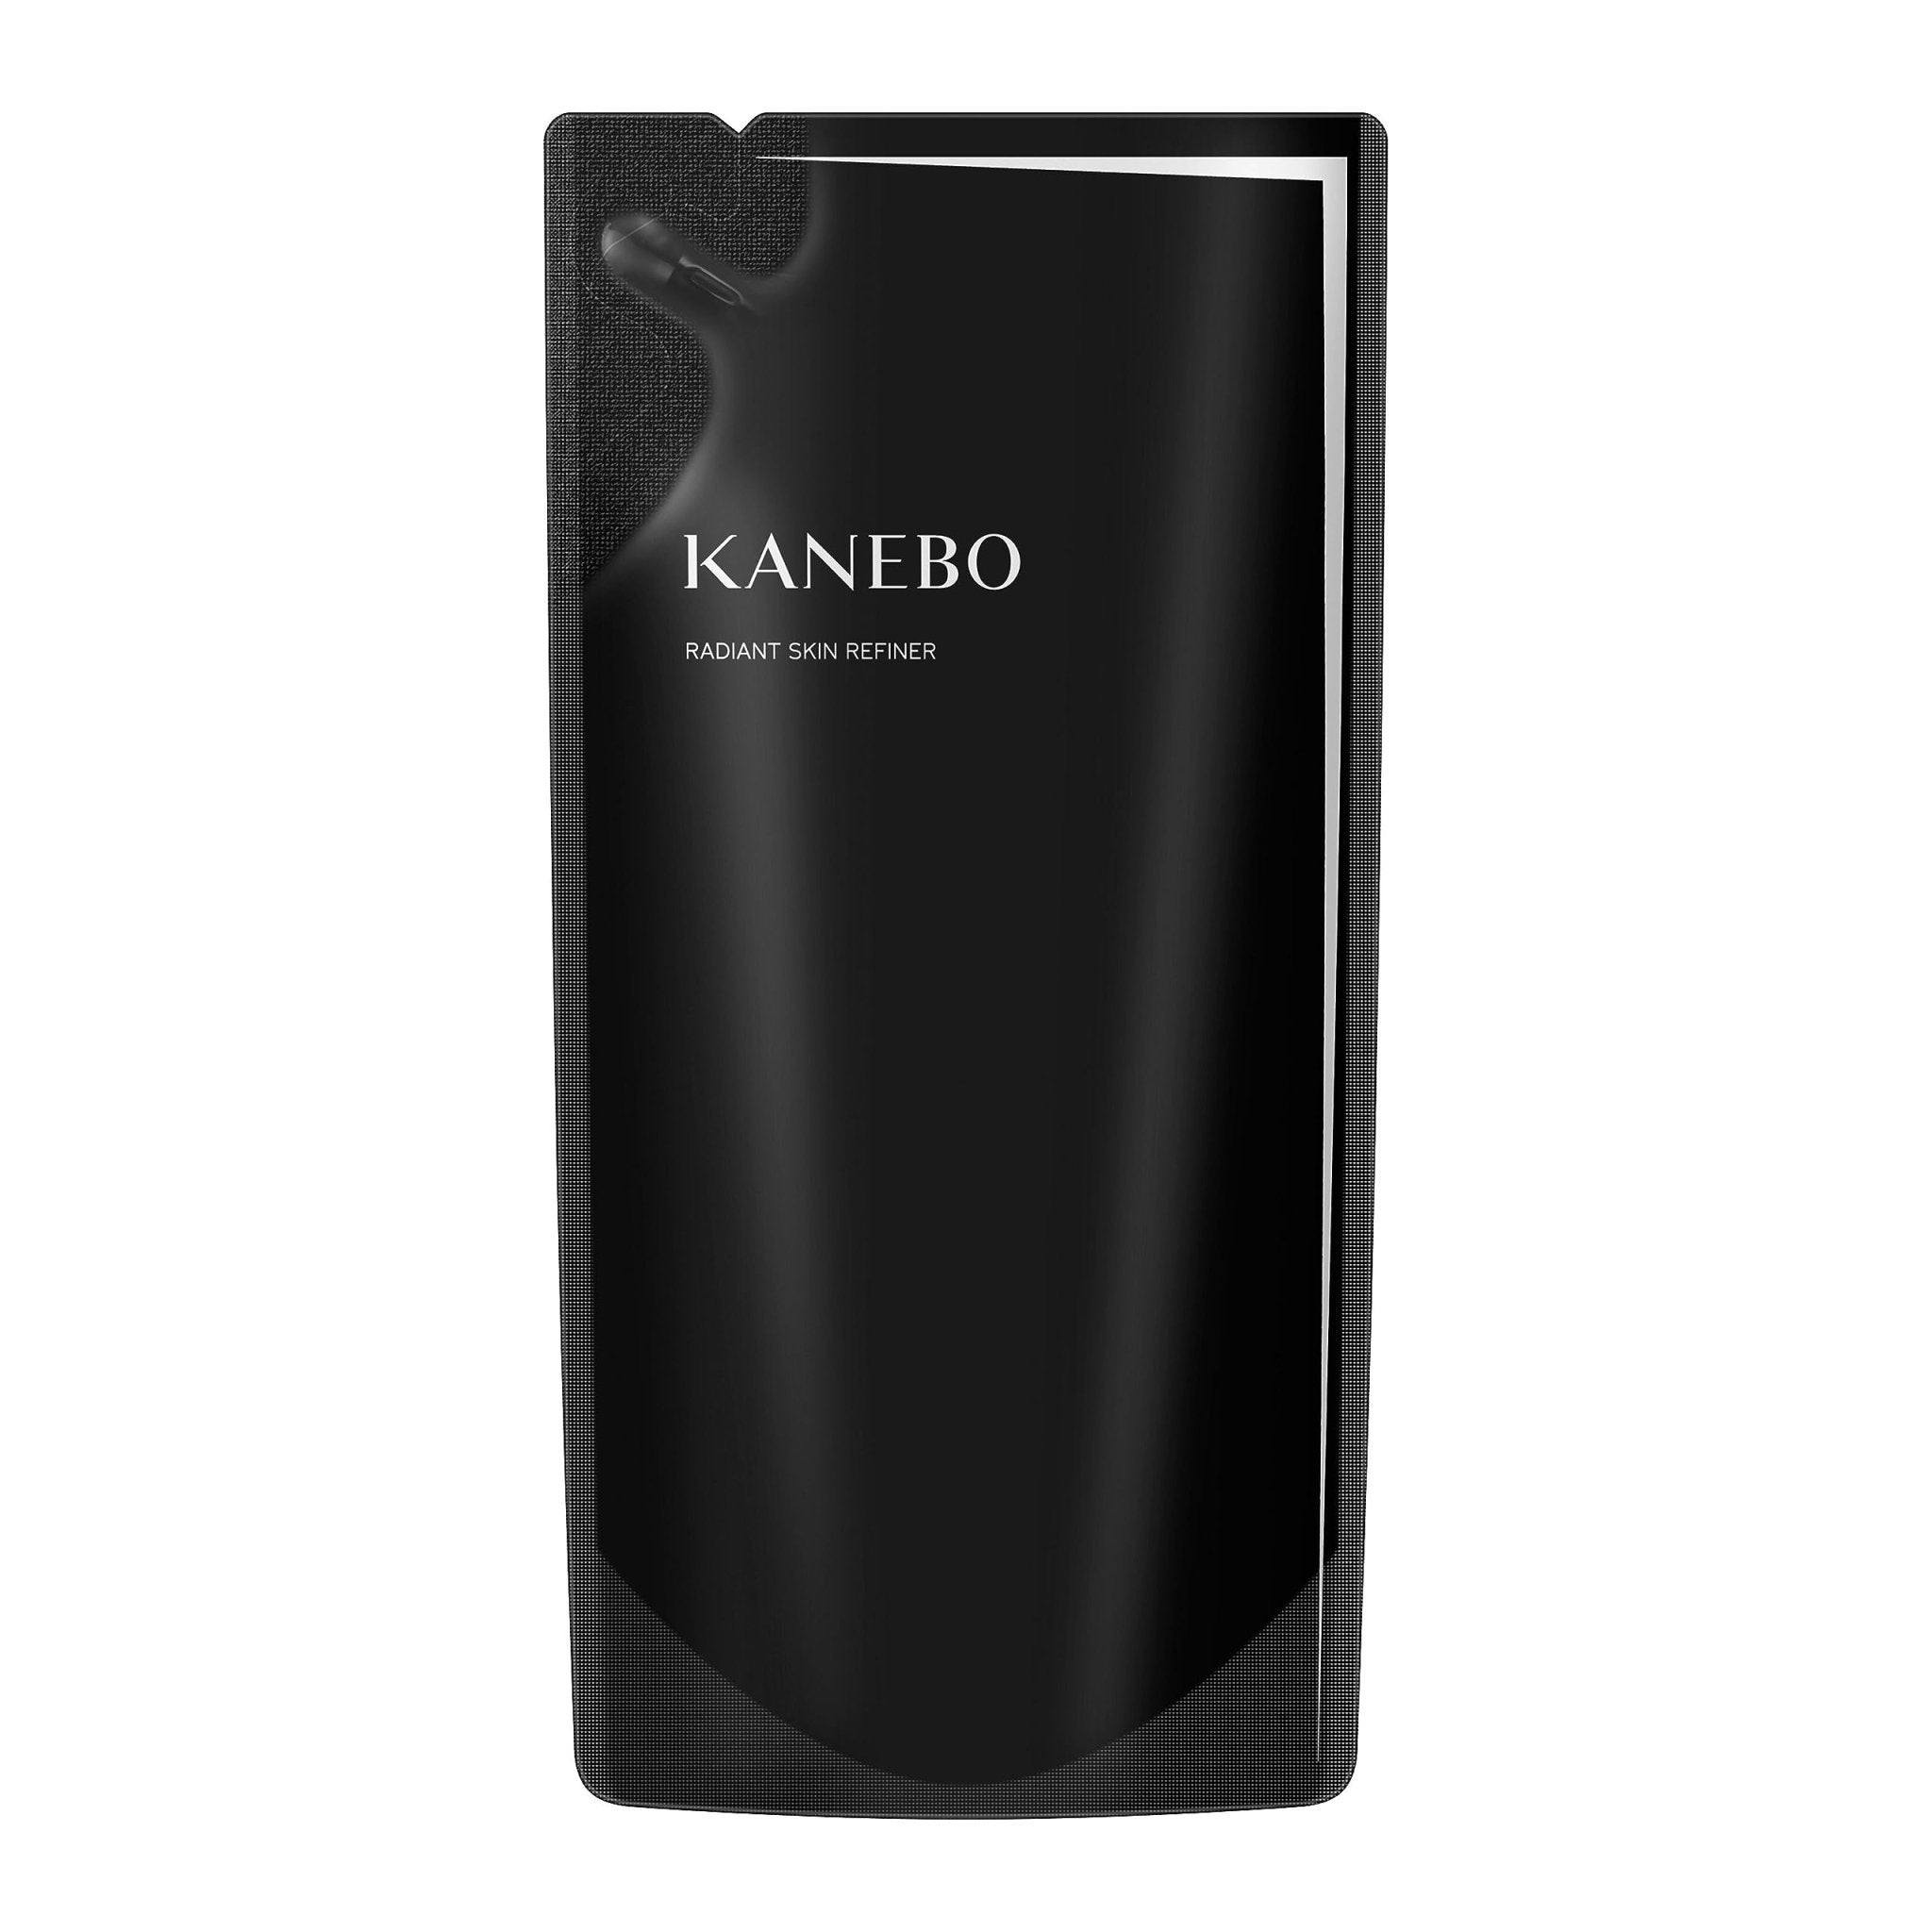 Kanebo Radiant Skin Refiner Refill - Enhancing Facial Care by Kanebo